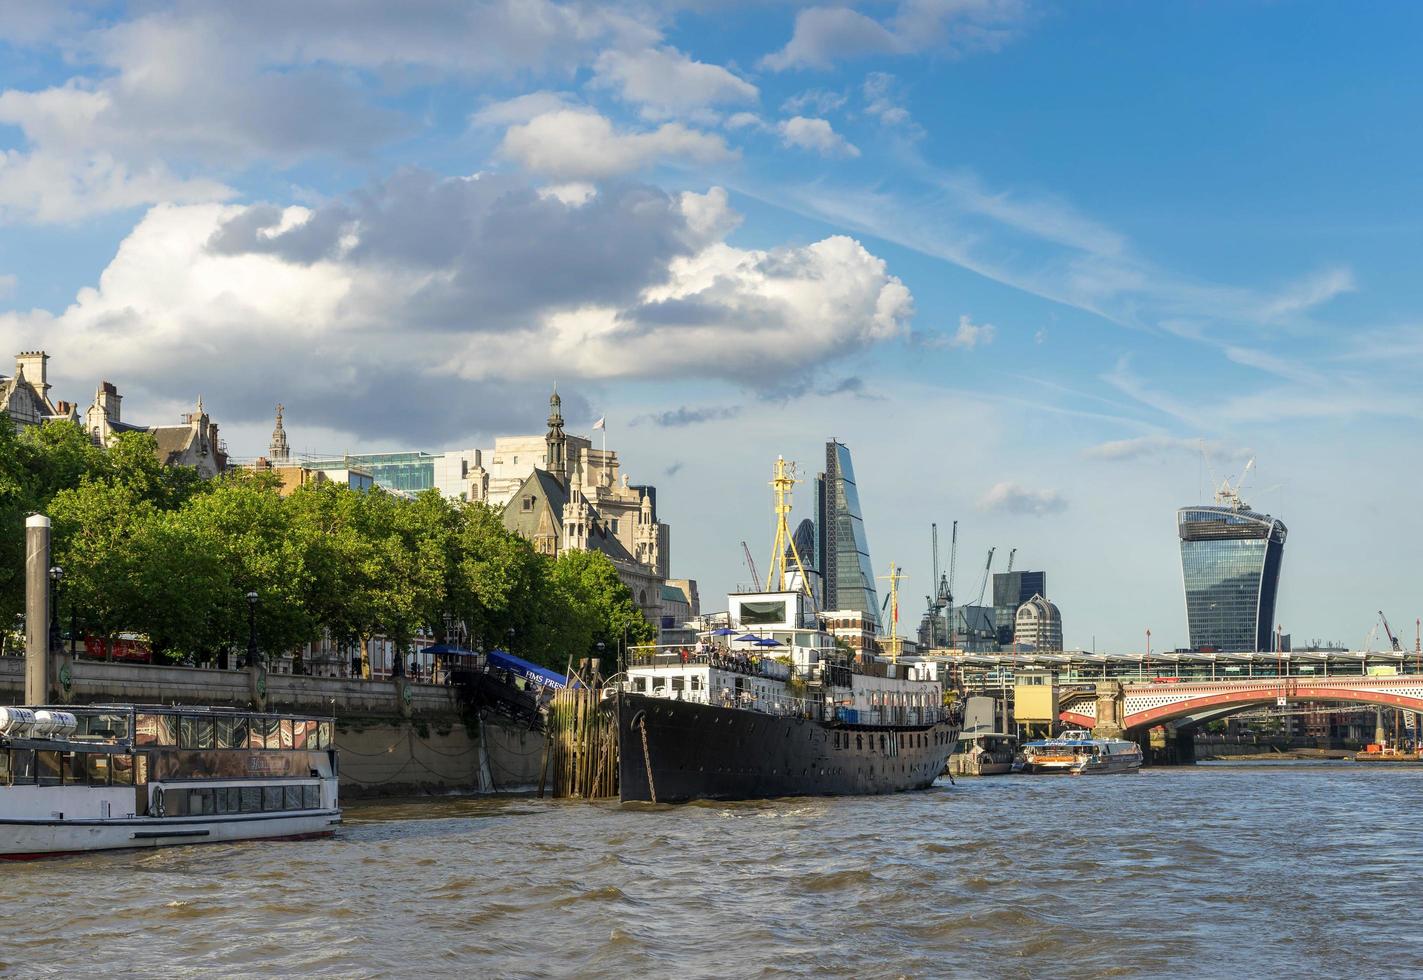 london, Storbritannien, 2014. flodbar på Themsen foto